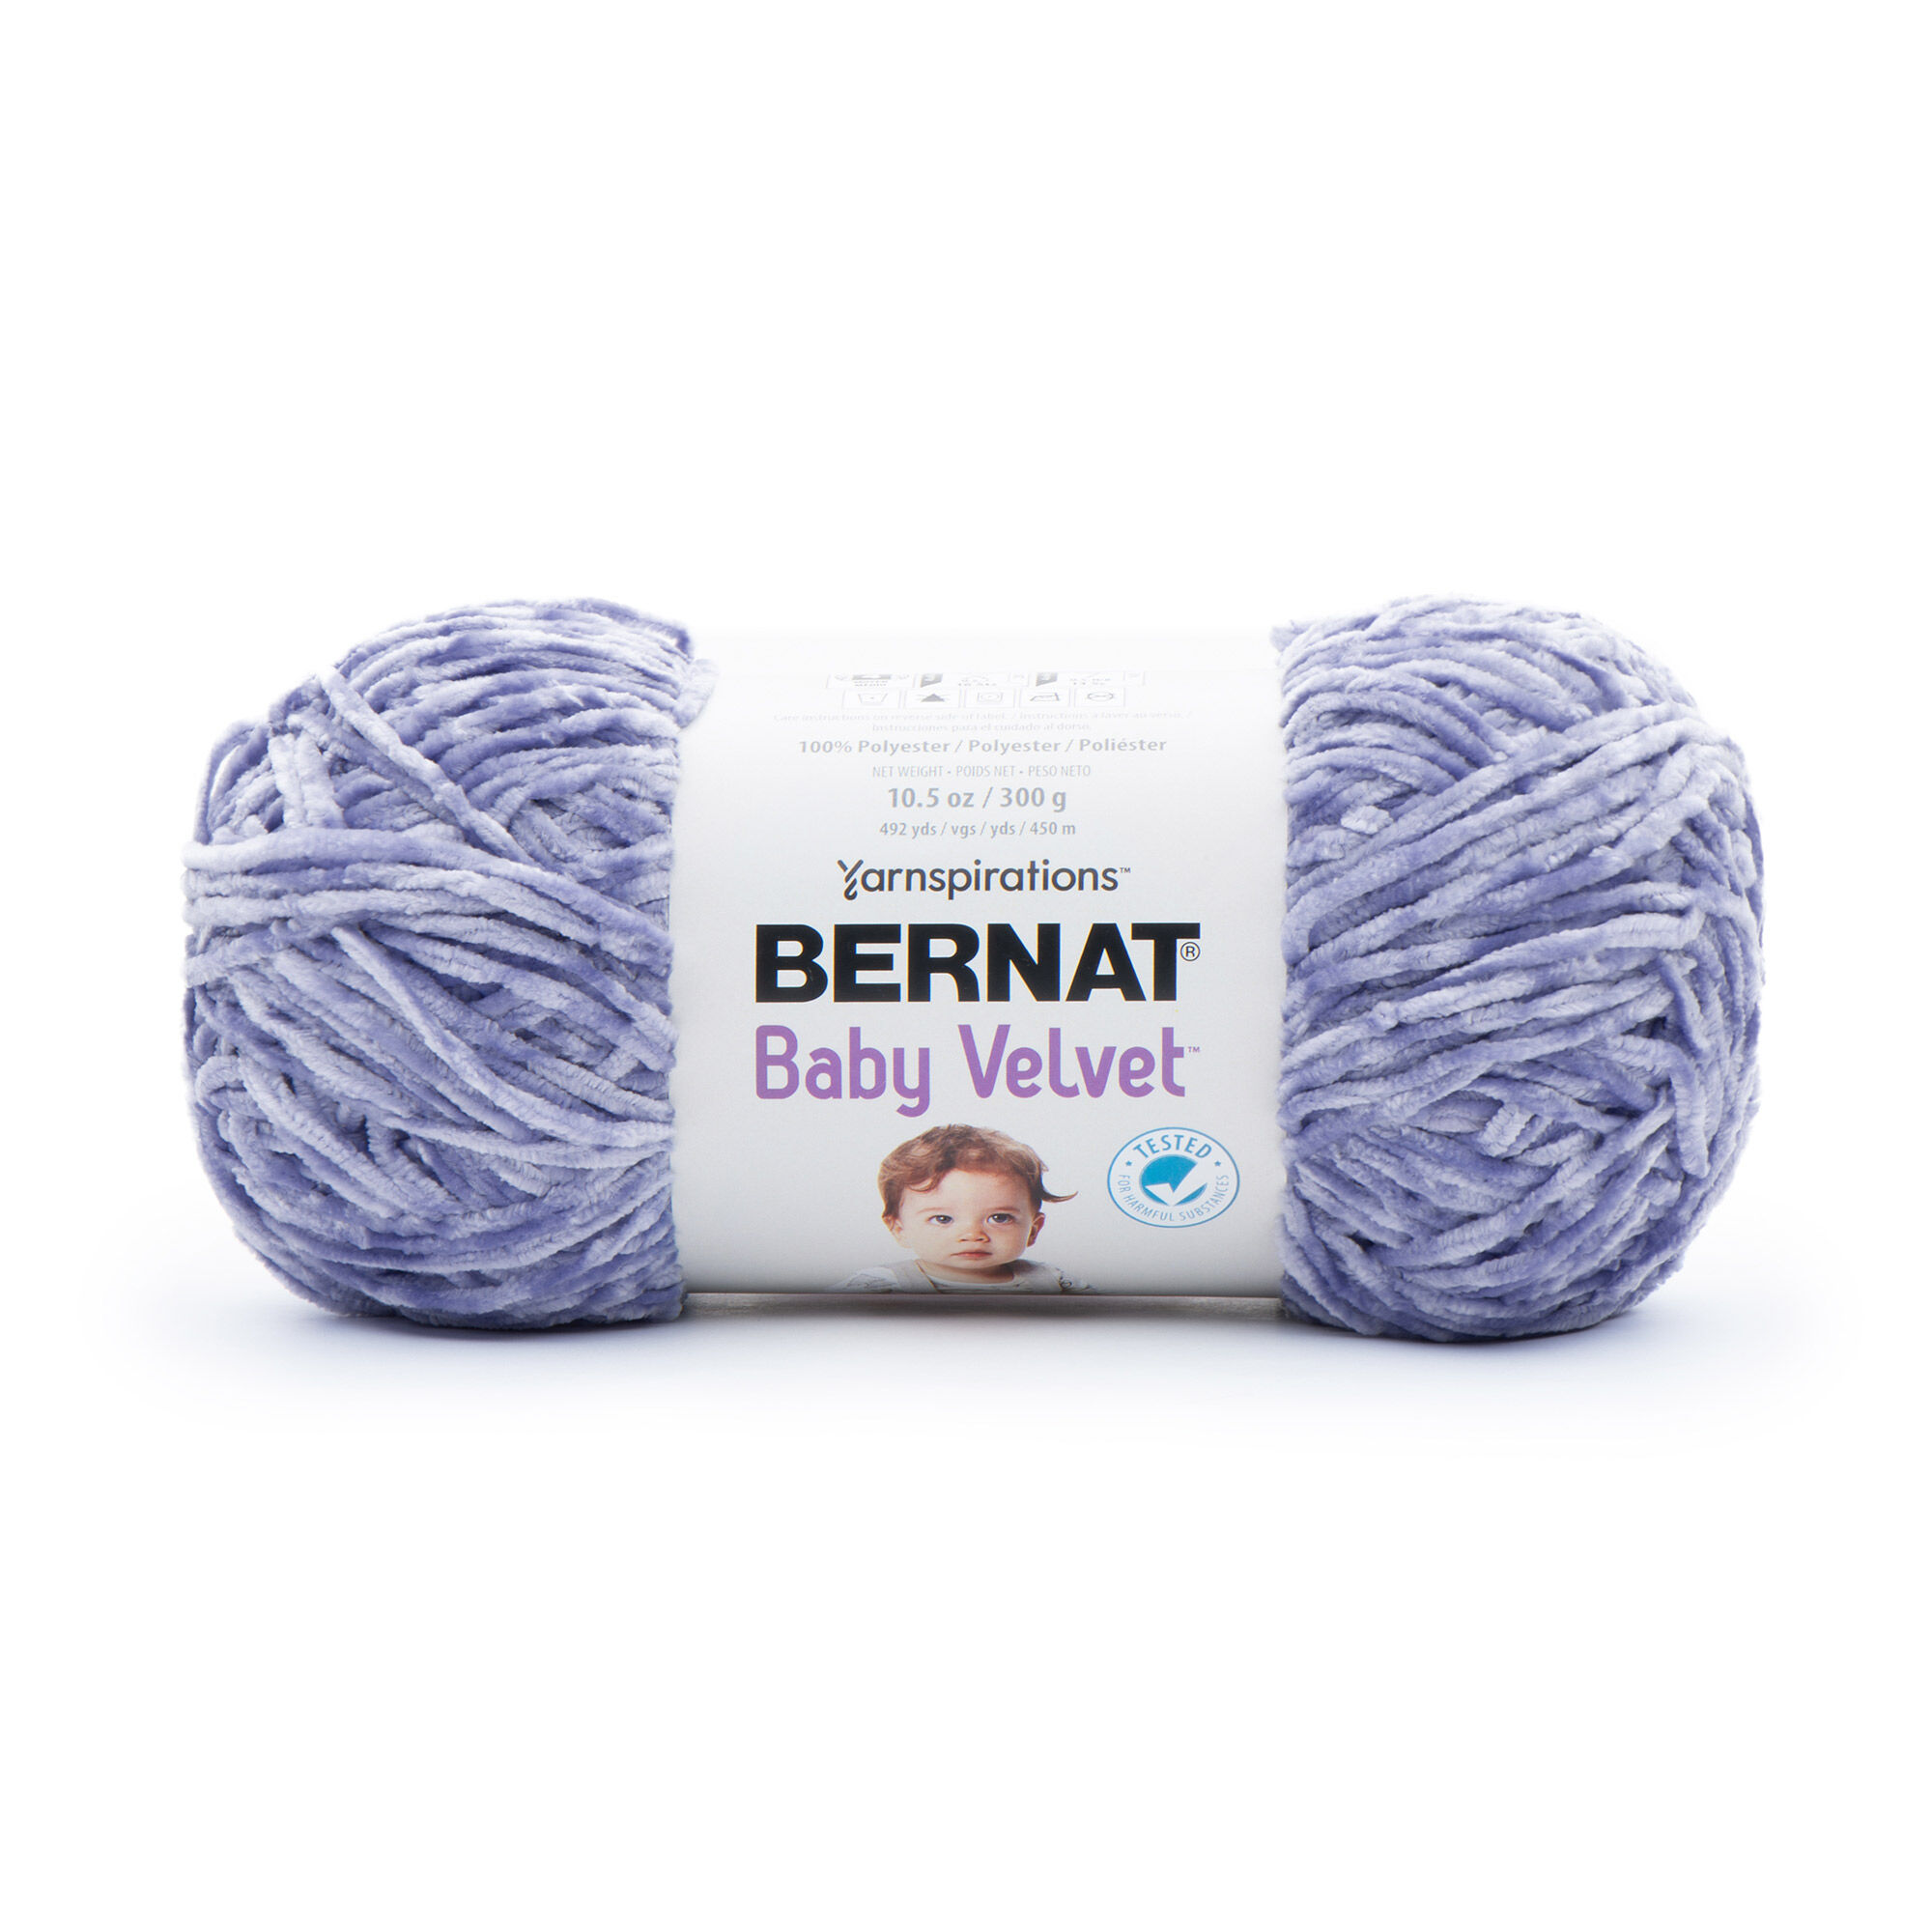 Bernat Baby Blanket Yarn, Pitter Patter, 3 Skeins - 3.5 oz